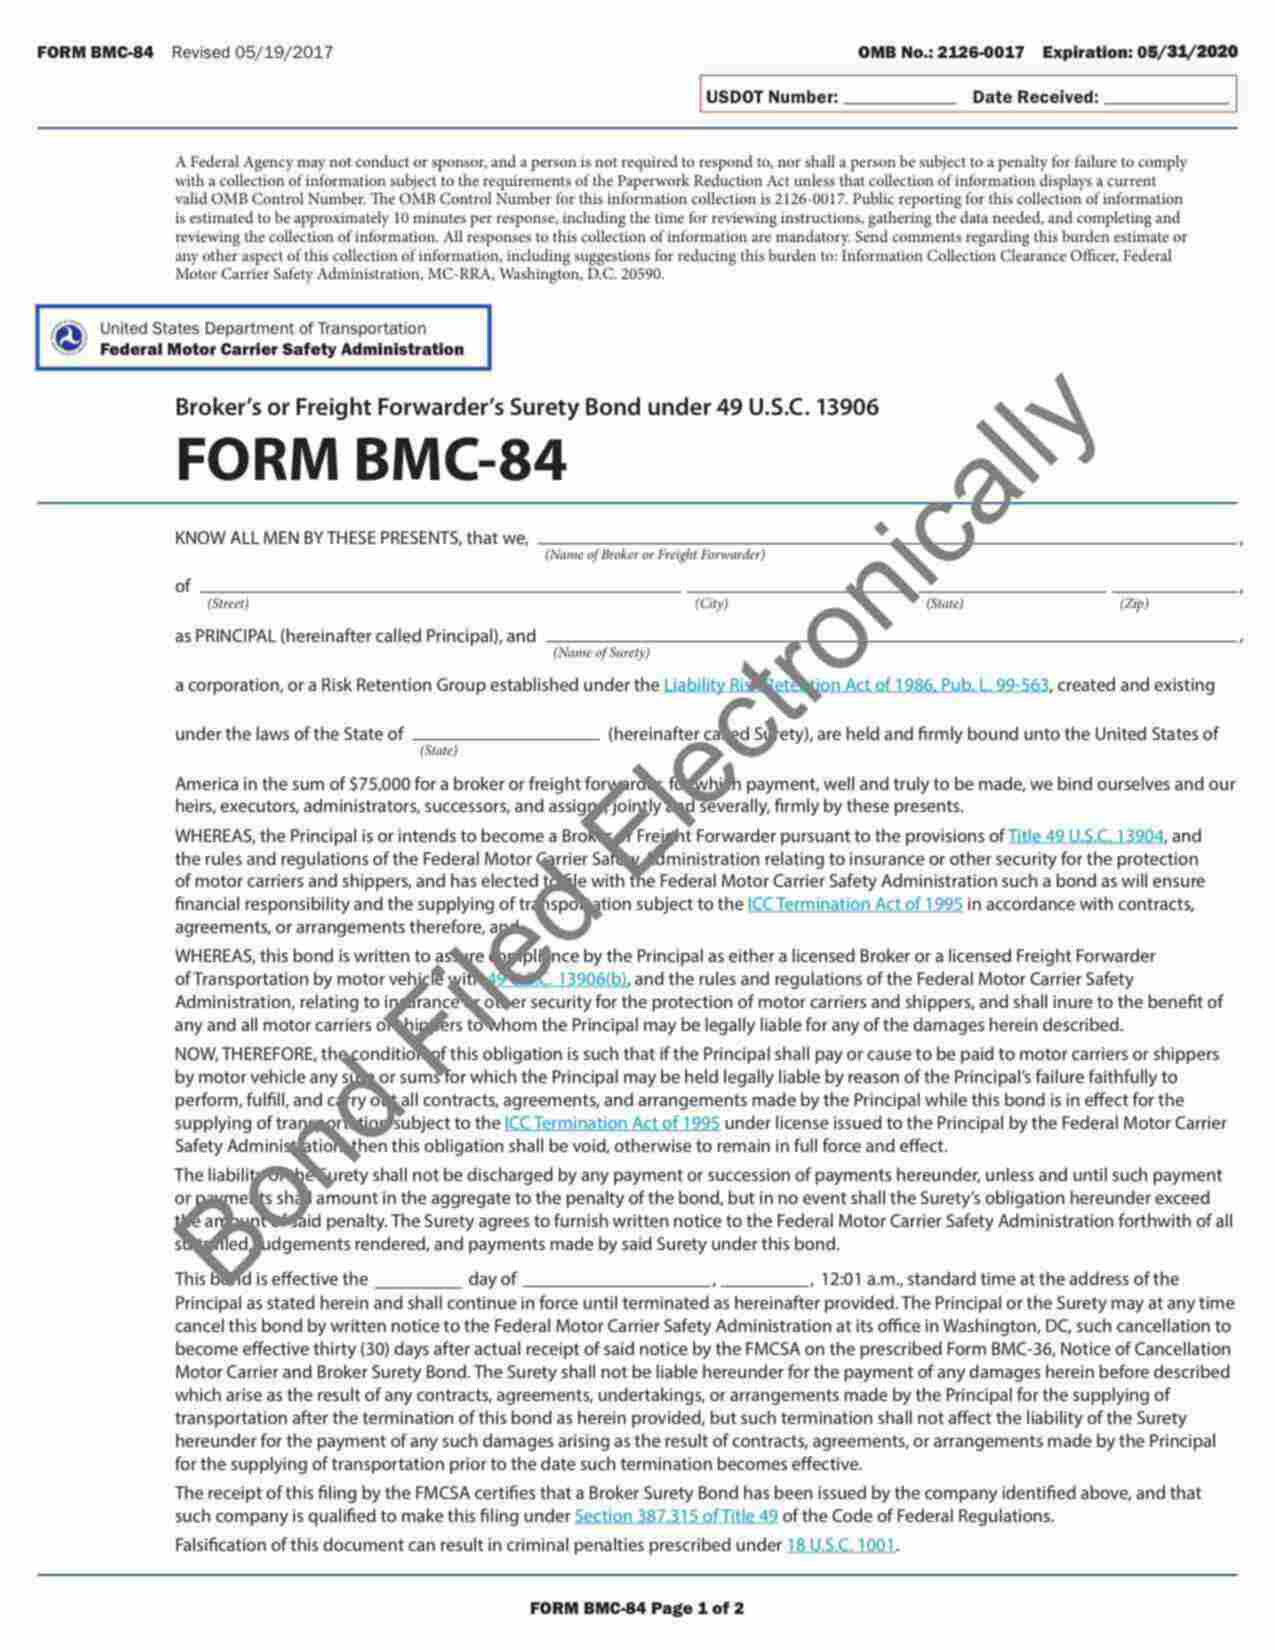 South Carolina Property Broker or Freight Forwarder BMC-84 (ICC Broker) Bond Form